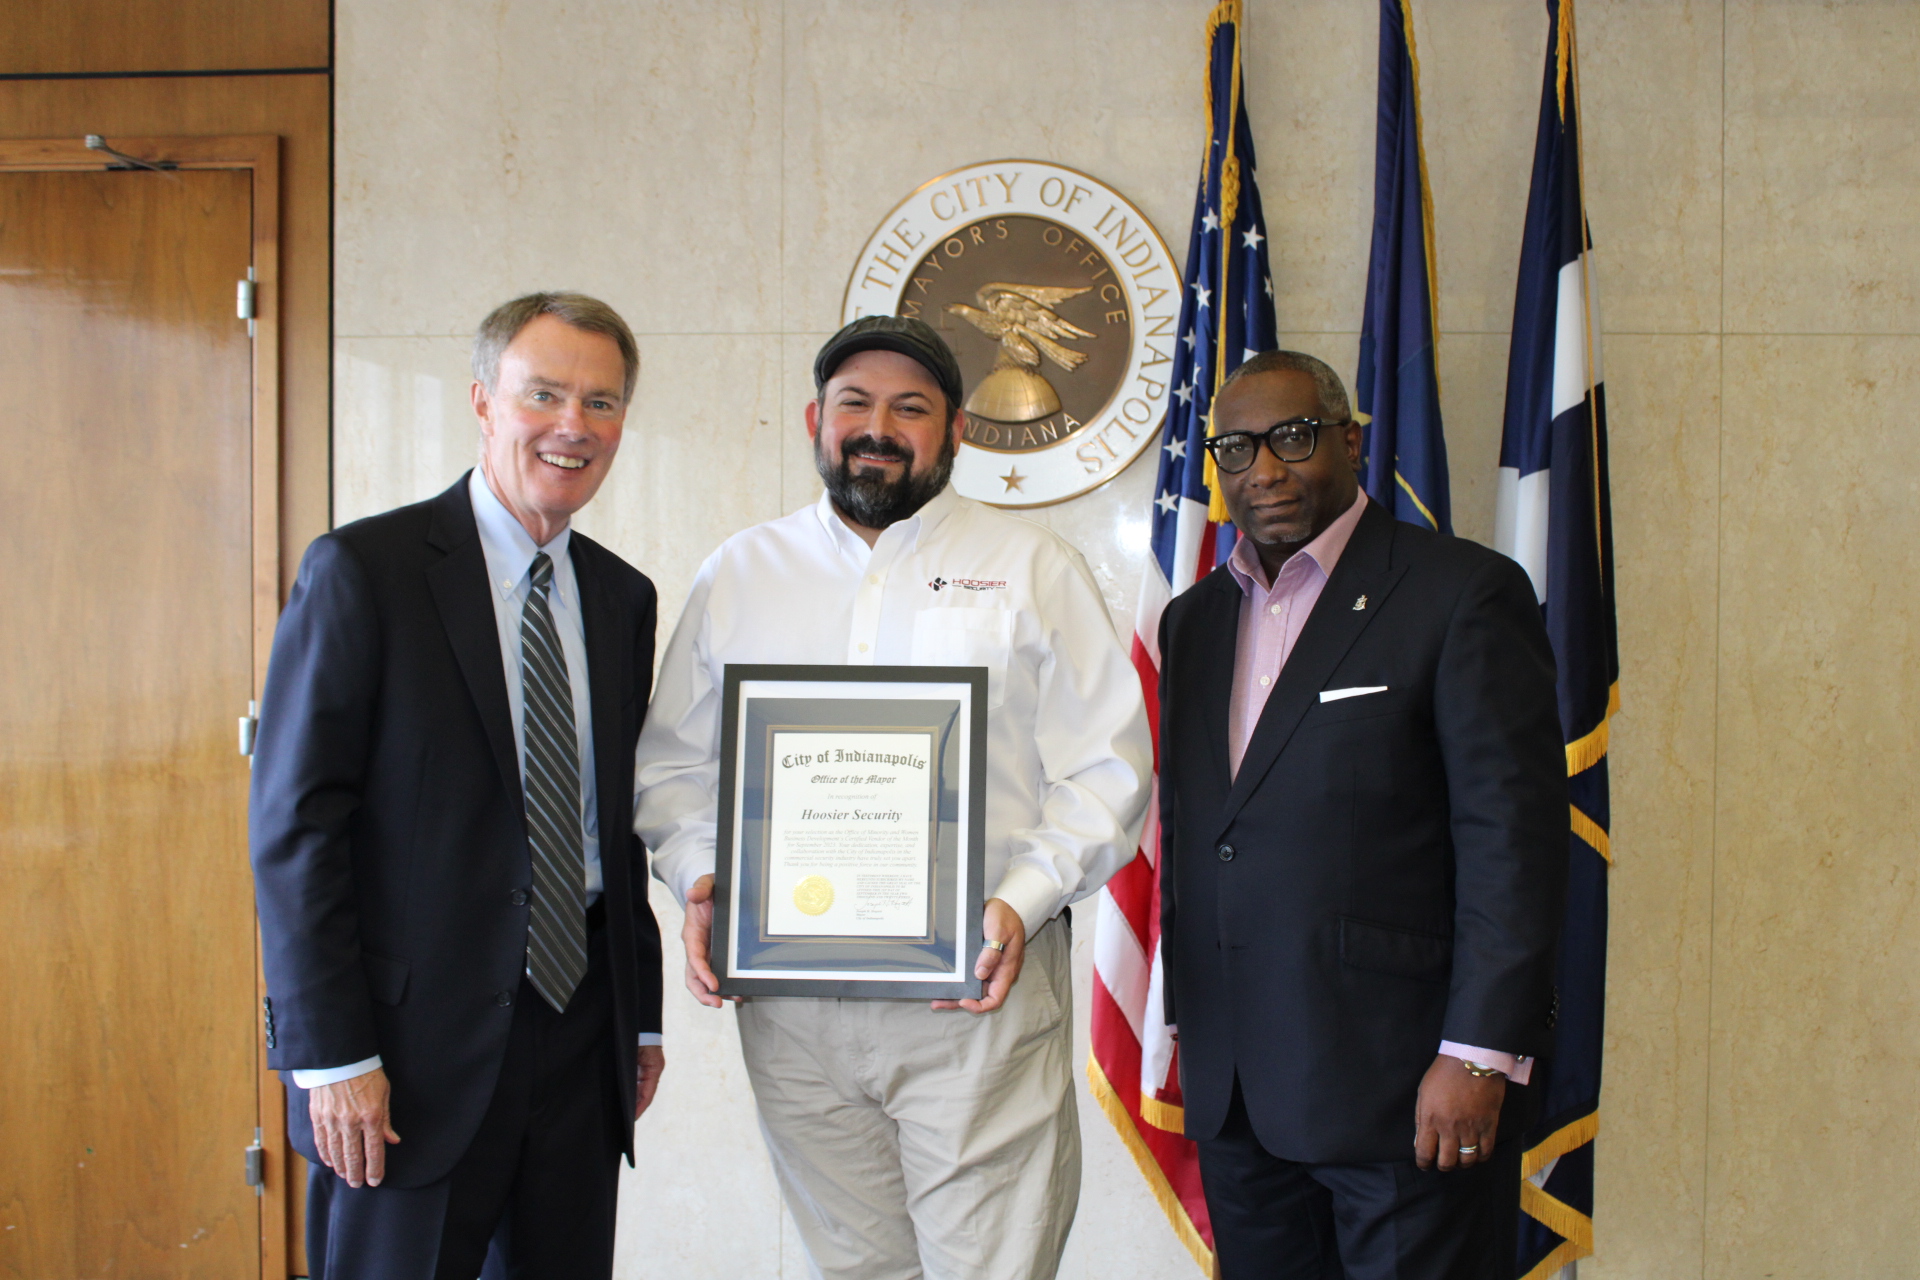 Hoosier Security named September 2023 Certified Minority Vendor of the Month by Mayor Joe Hogsett